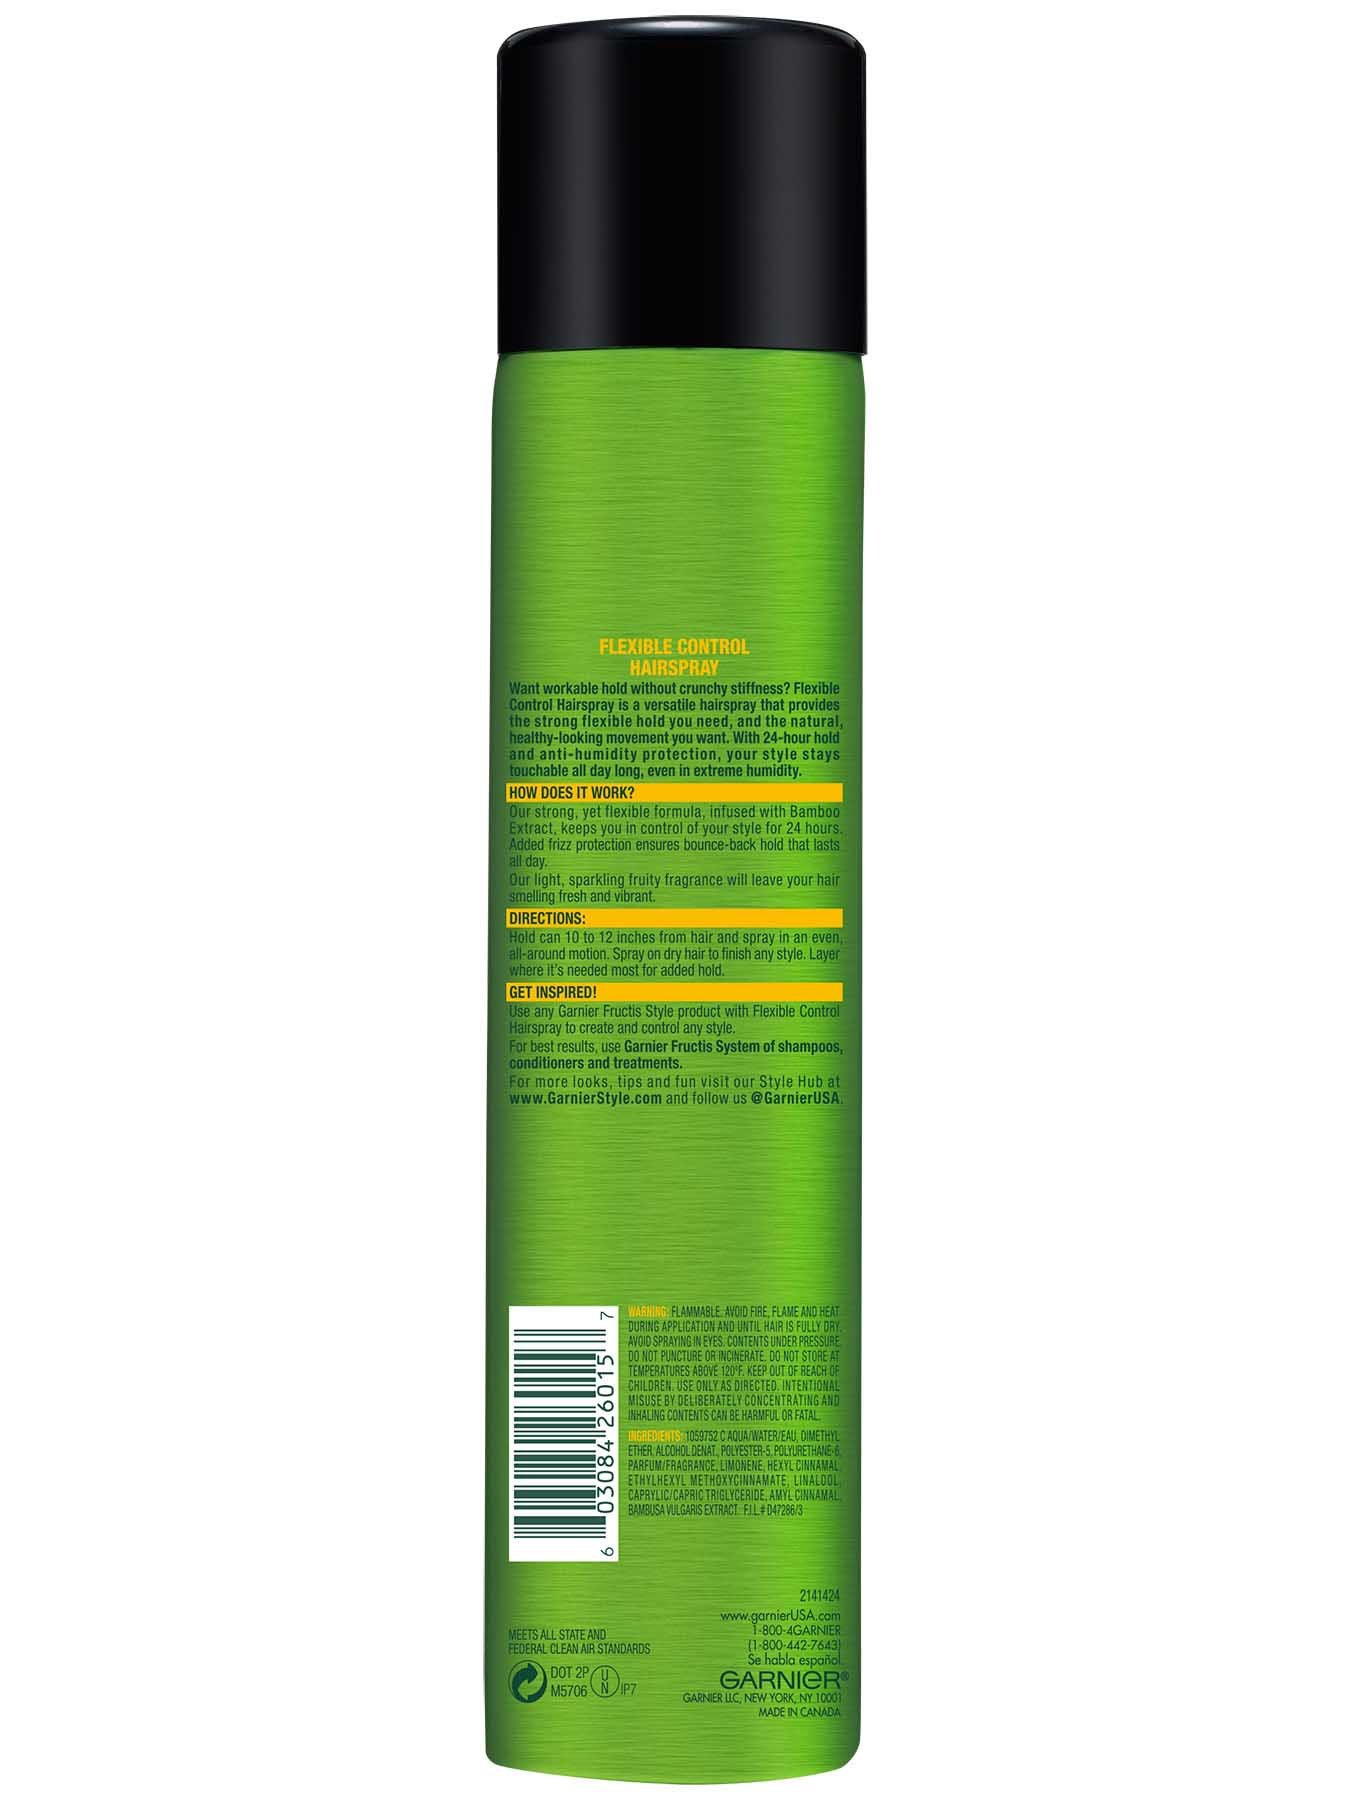 Back view of Flexible Control Anti-Humidity Aerosol Hair Spray.